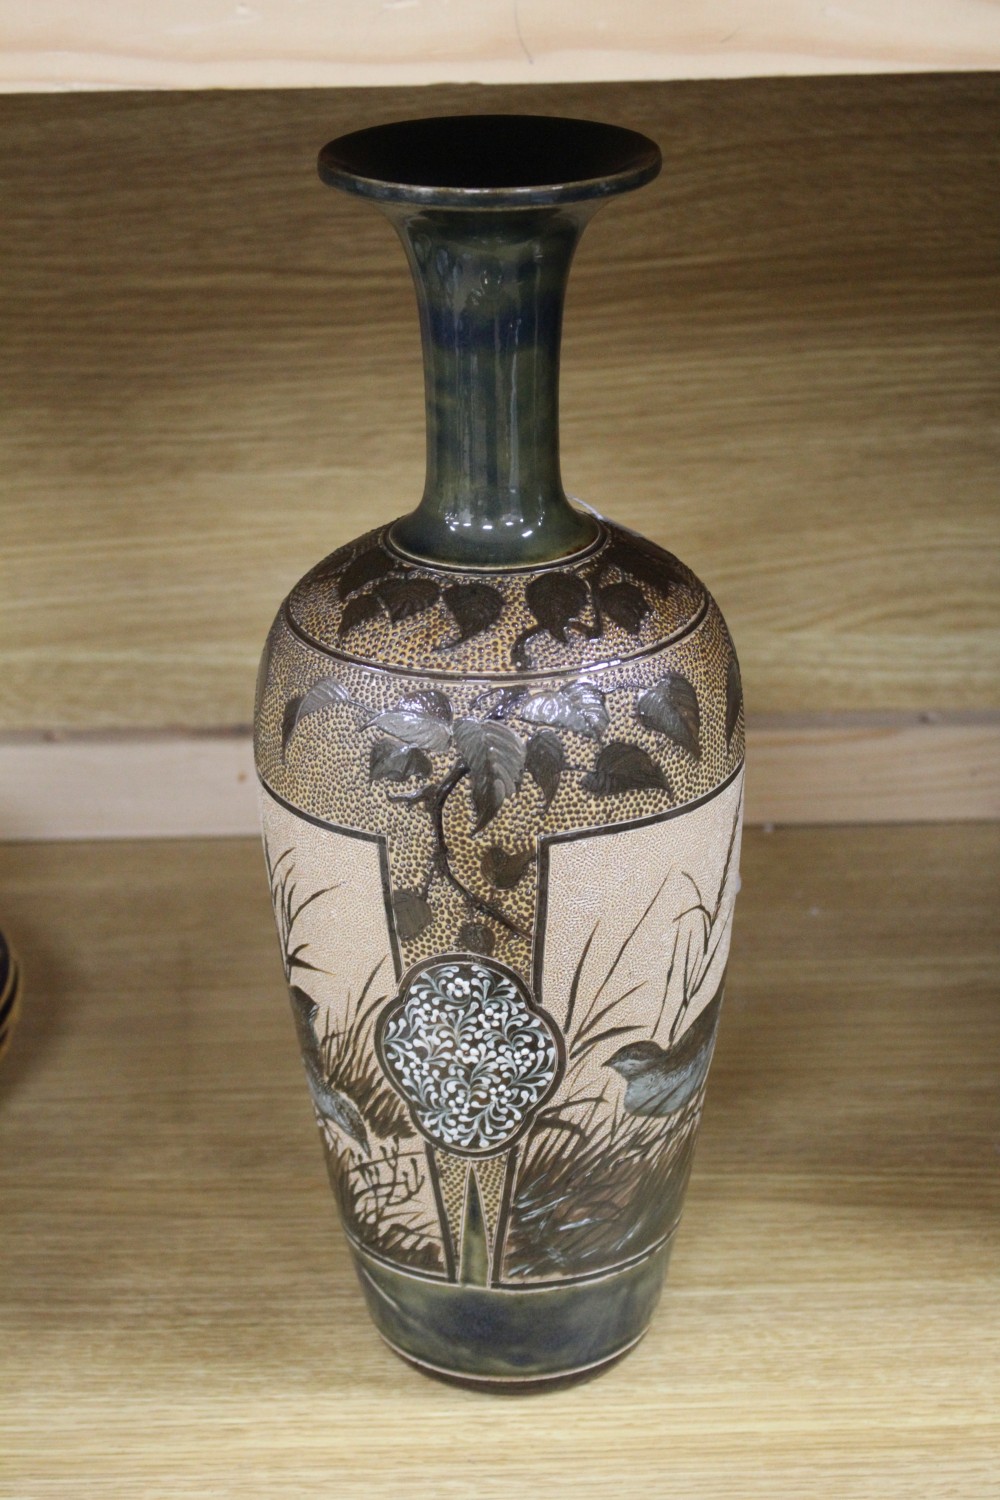 Florence E Barlow for Doulton Lambeth, a large pate sur pate partridge vase, dated 1884, 38.5cm, neck restoration